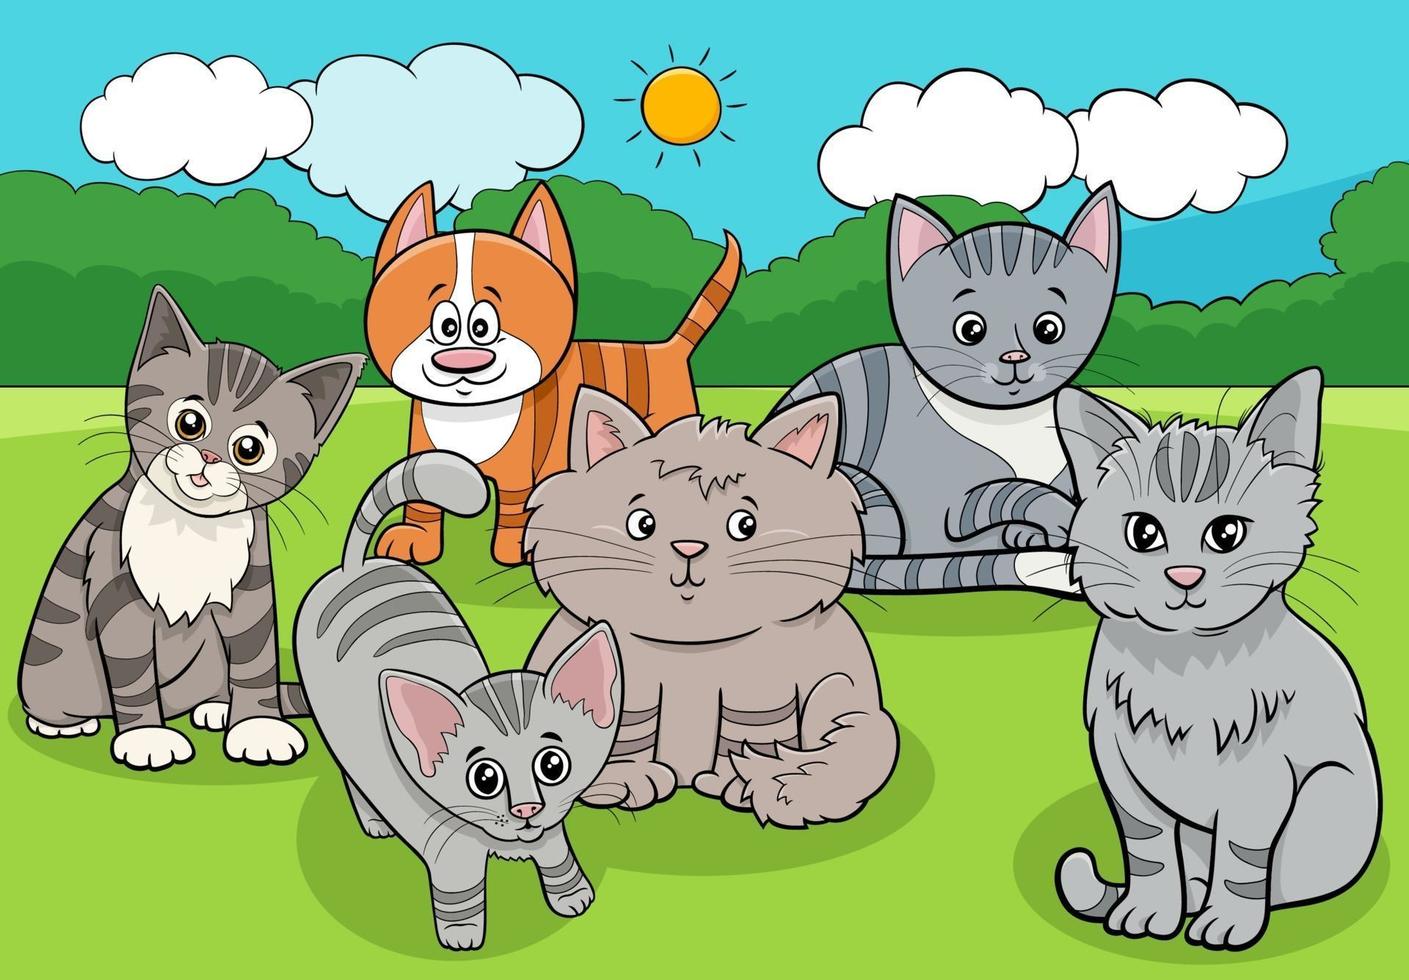 cats and kittens animals group cartoon illustration vector